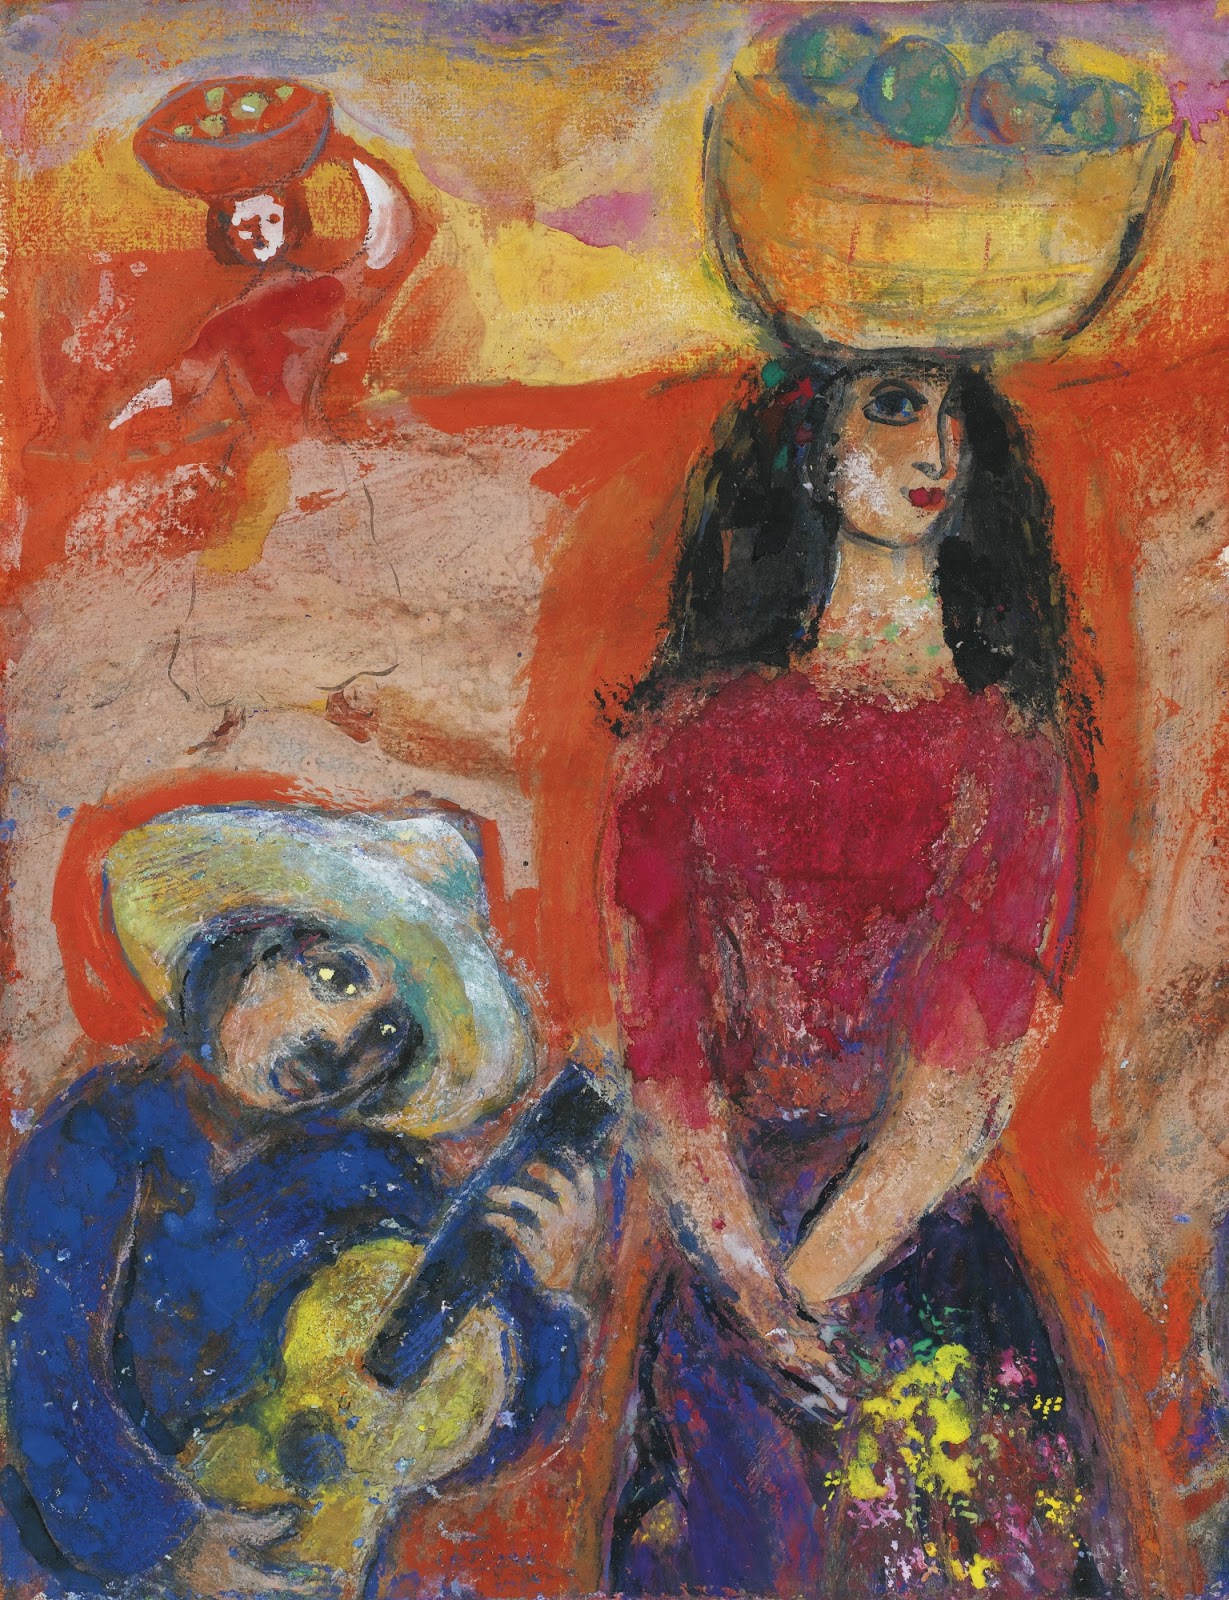 Marc+Chagall-1887-1985 (376).jpg